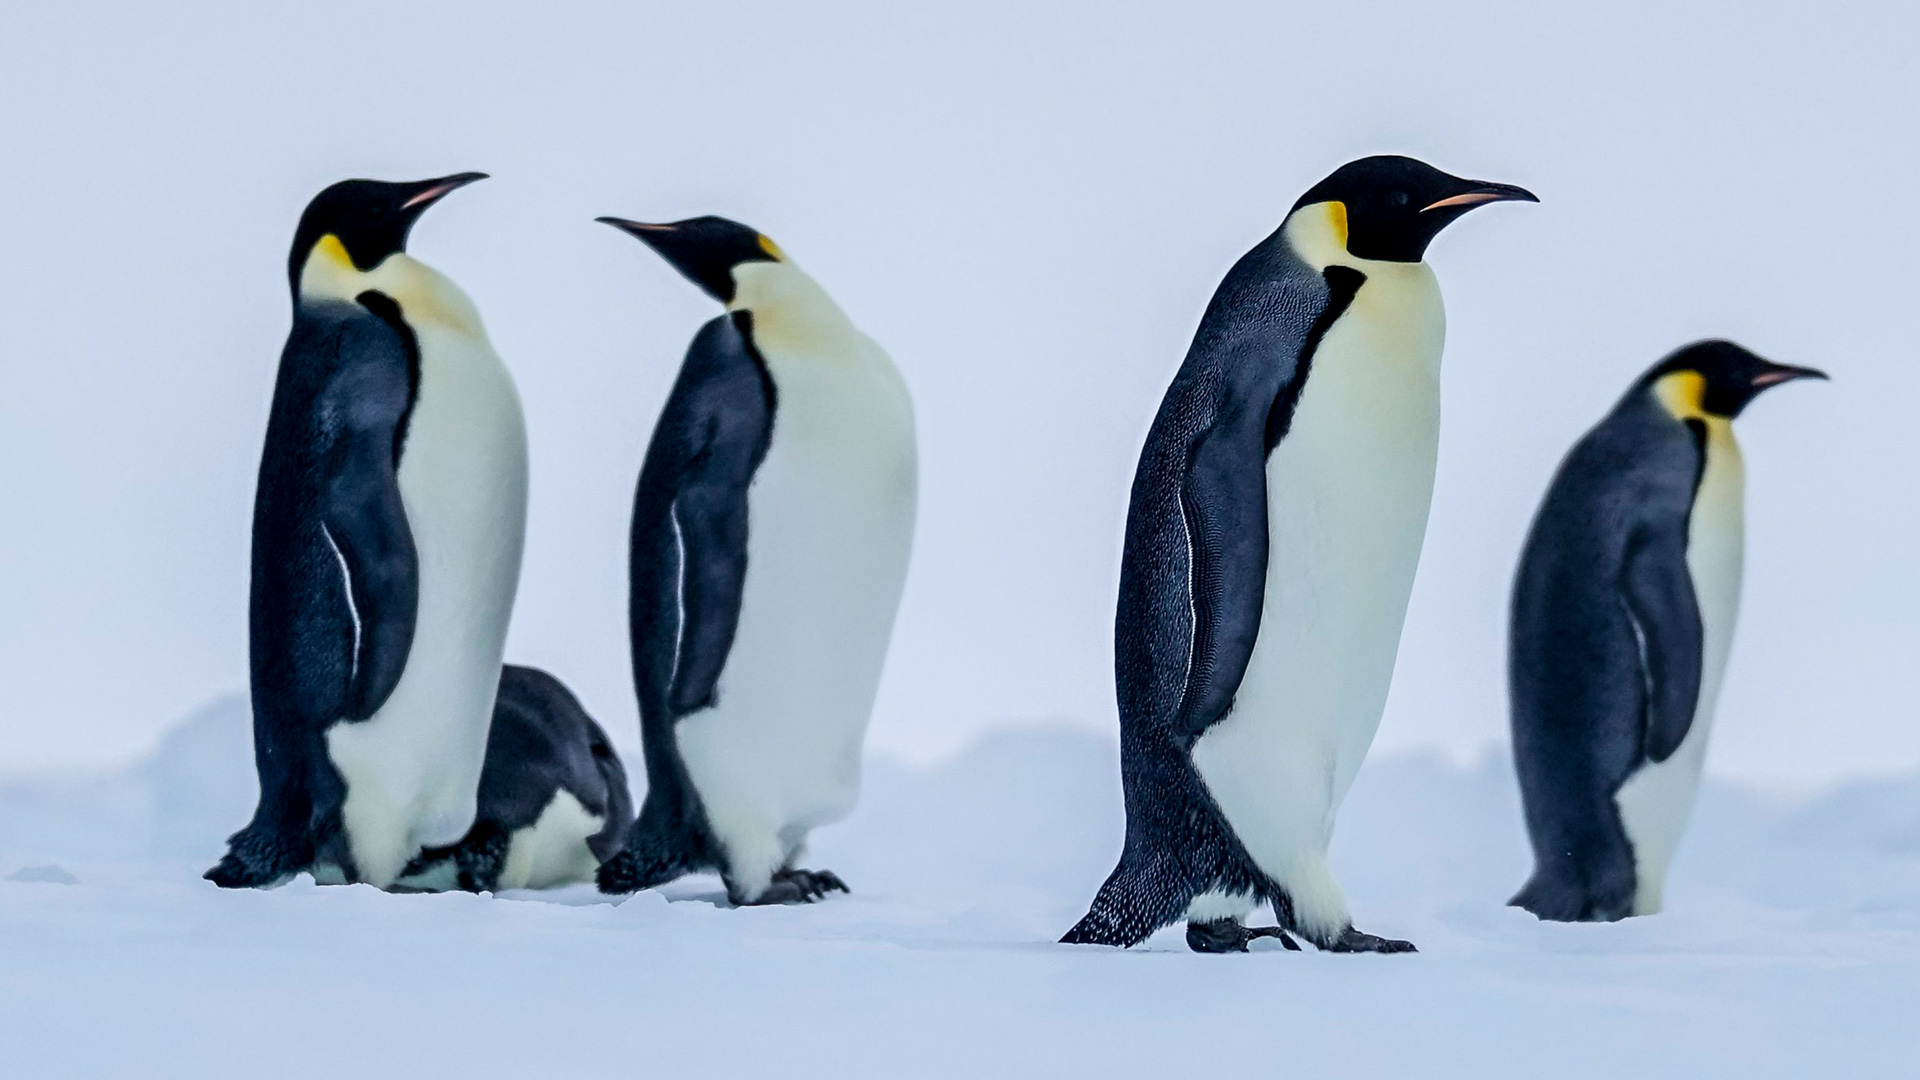 Antarctica_RossSea_©AngelaJapha©_theWorld_wildlifepenguins____20170130_151406_4148x2766_3.3MB-scaled